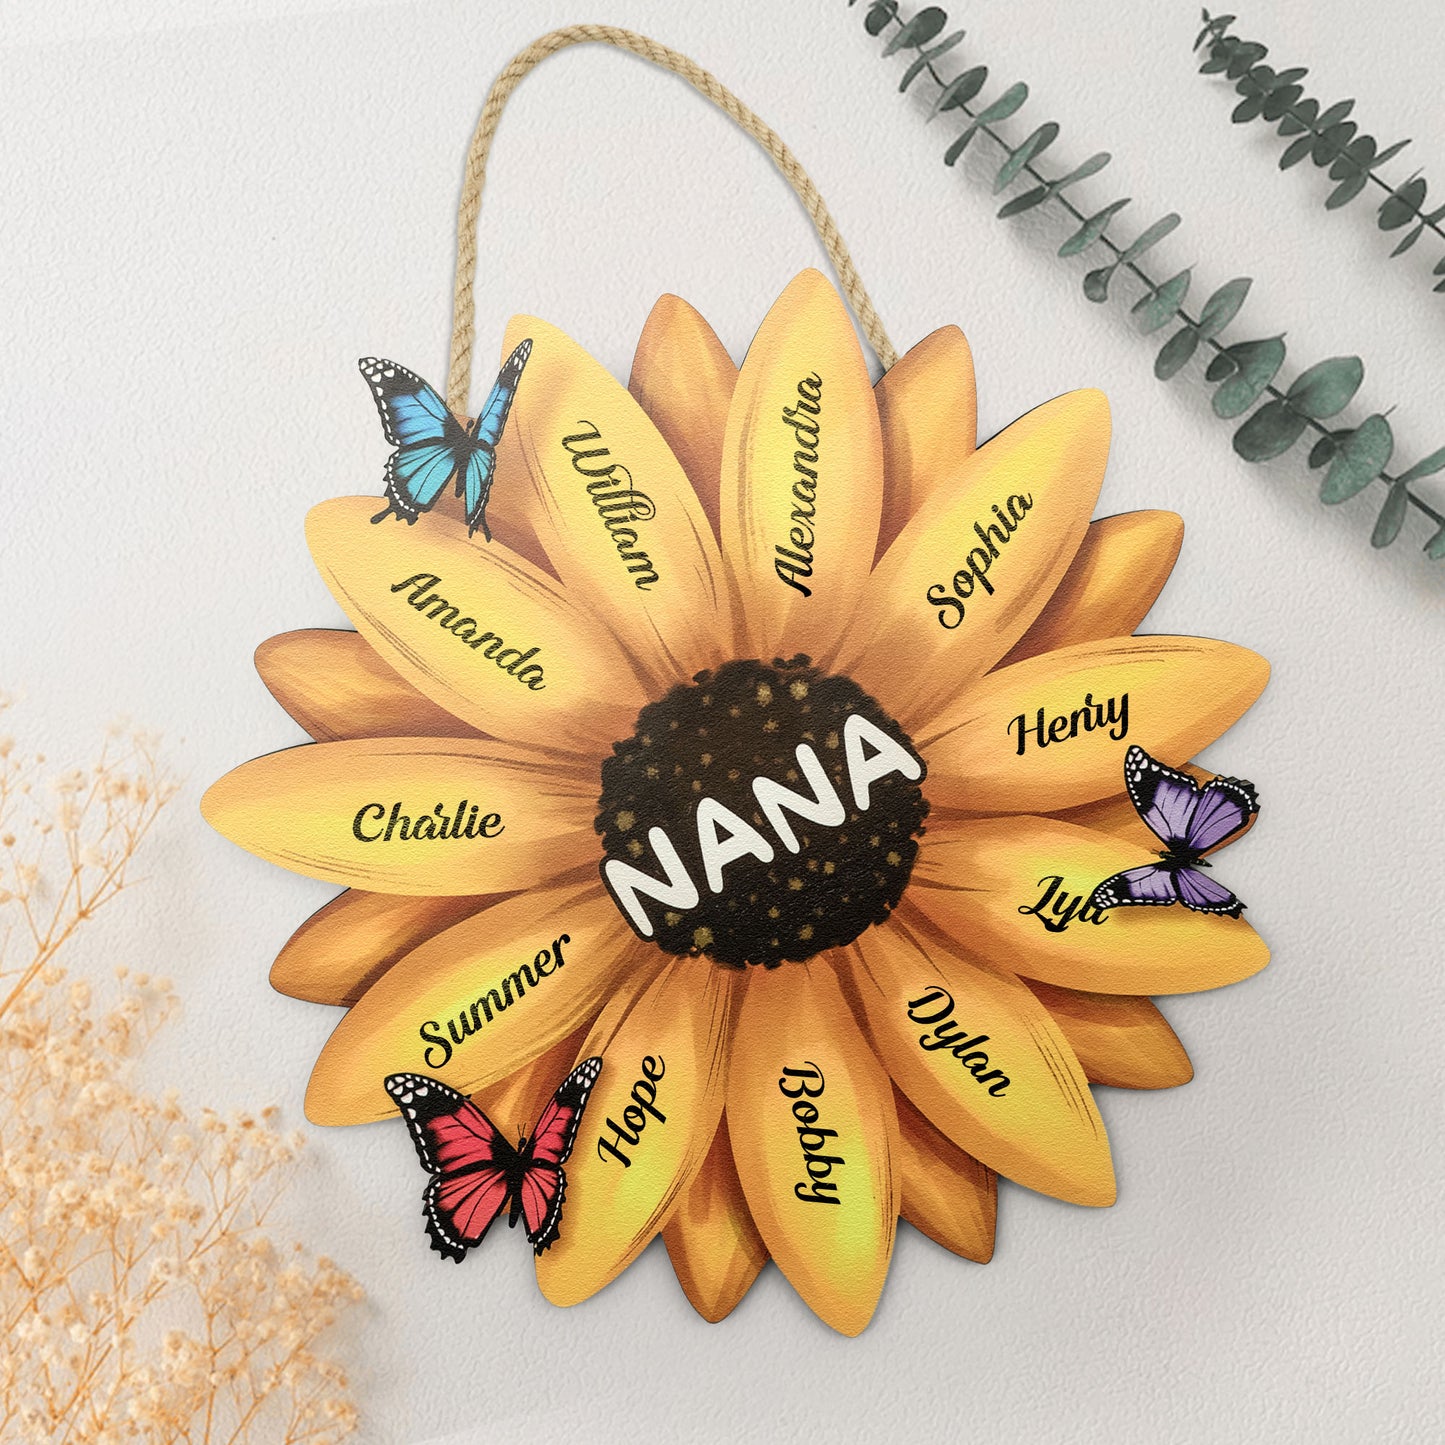 Nana Sunflower - Personalized Wood Sign